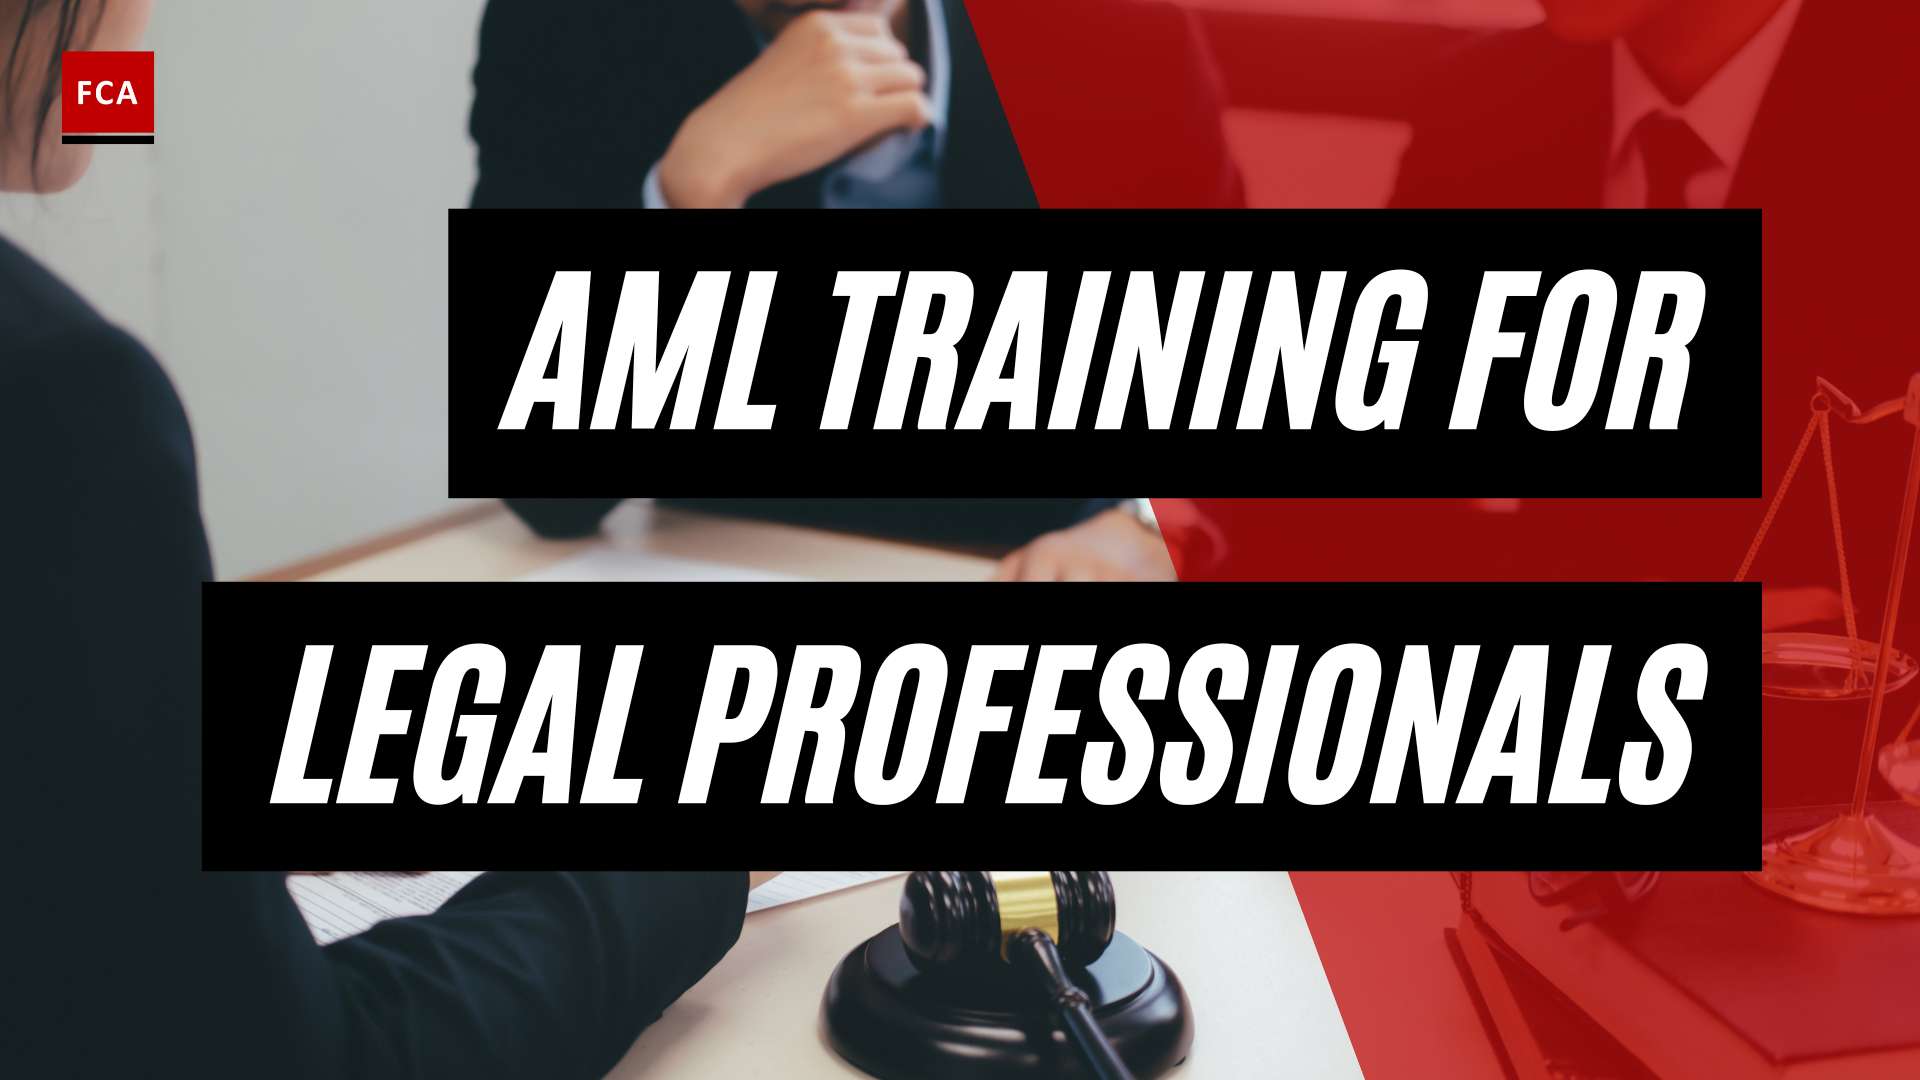 Defending Against Financial Crime: Aml Training For Legal Professionals